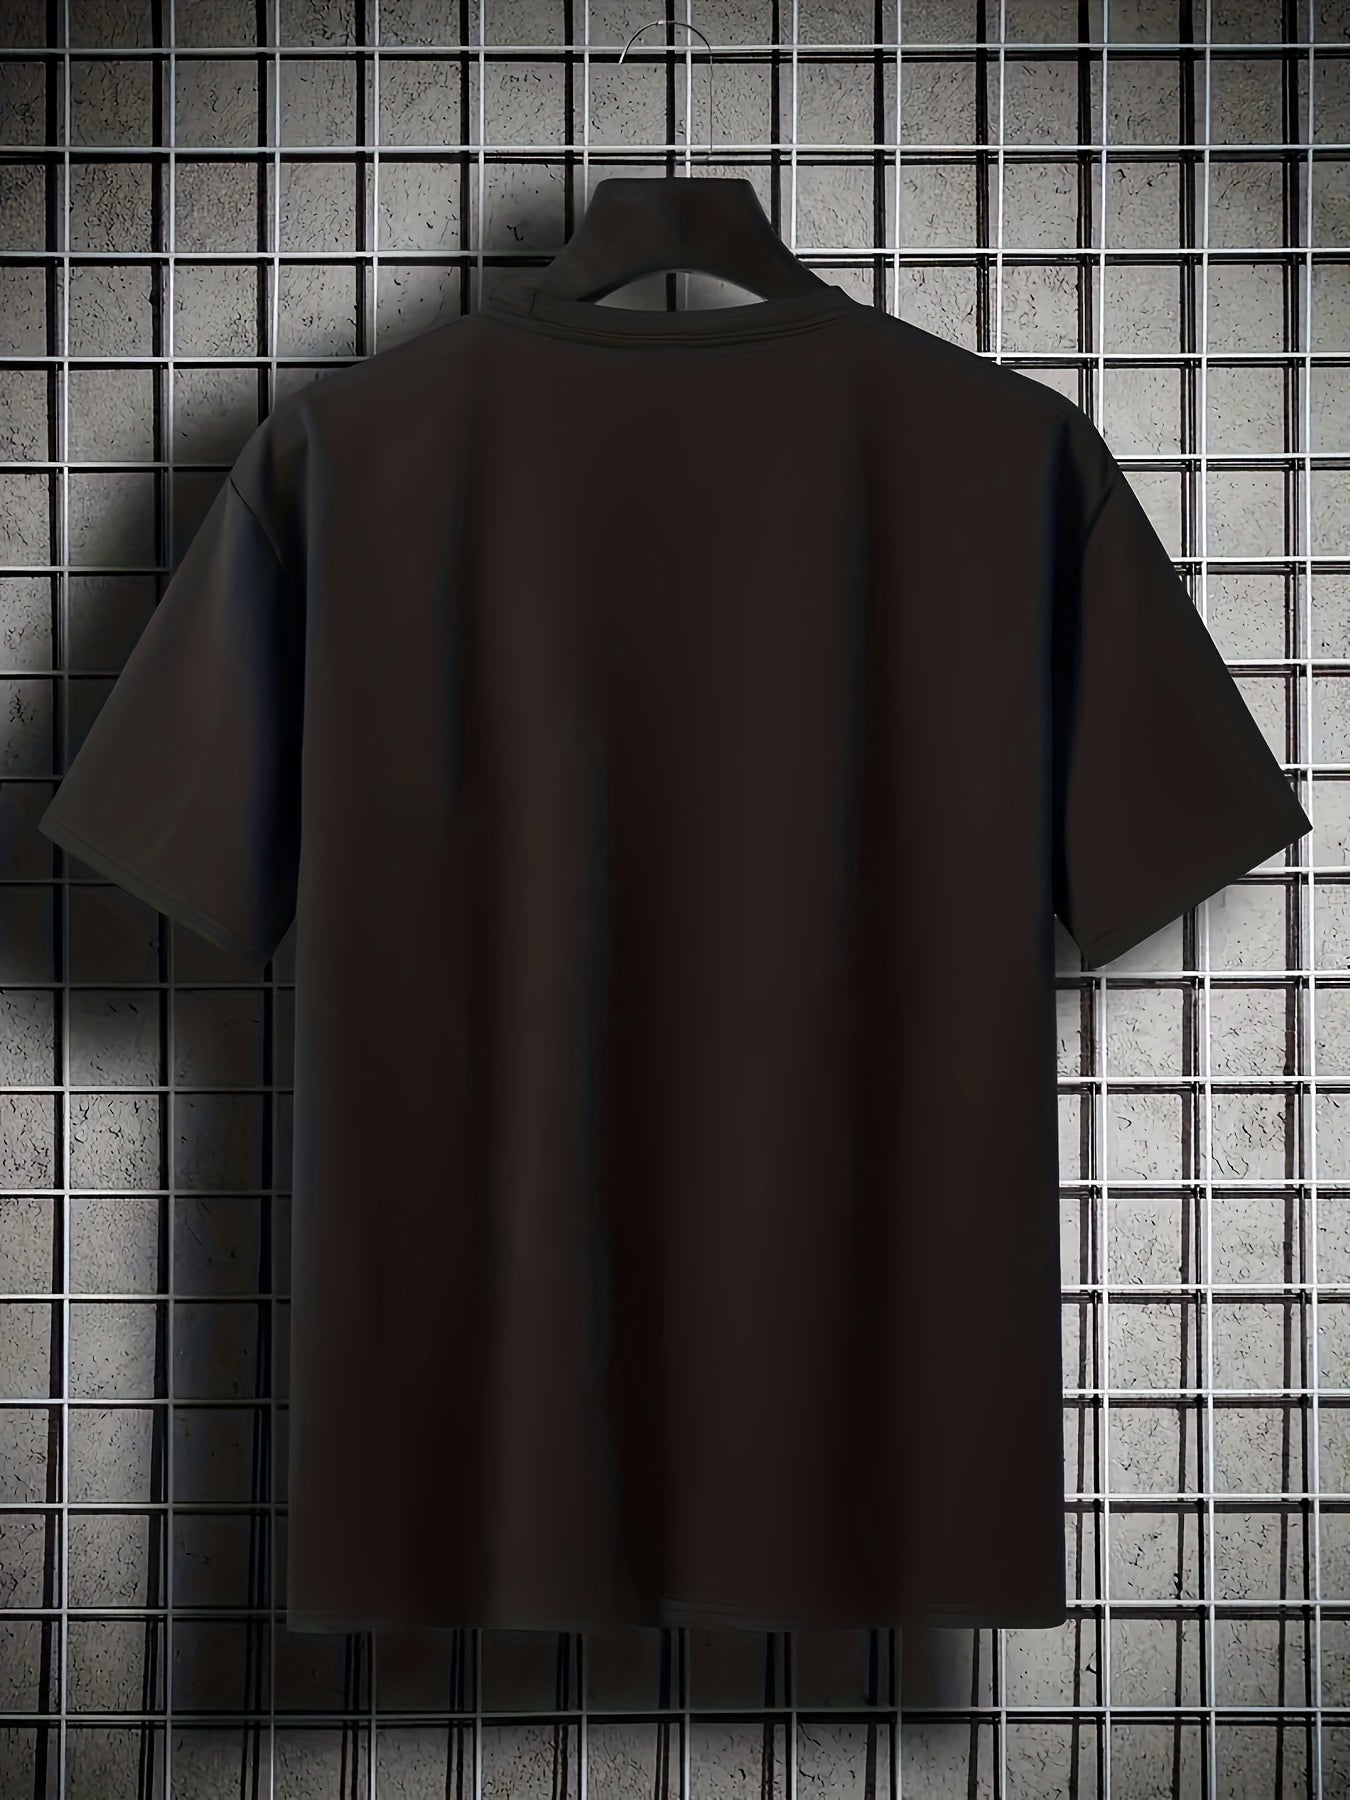 Trendy Gamer Print Boys Creative T-shirt, Casual Lightweight Comfy Short Sleeve Tee Tops, Kids Clothes For Summer